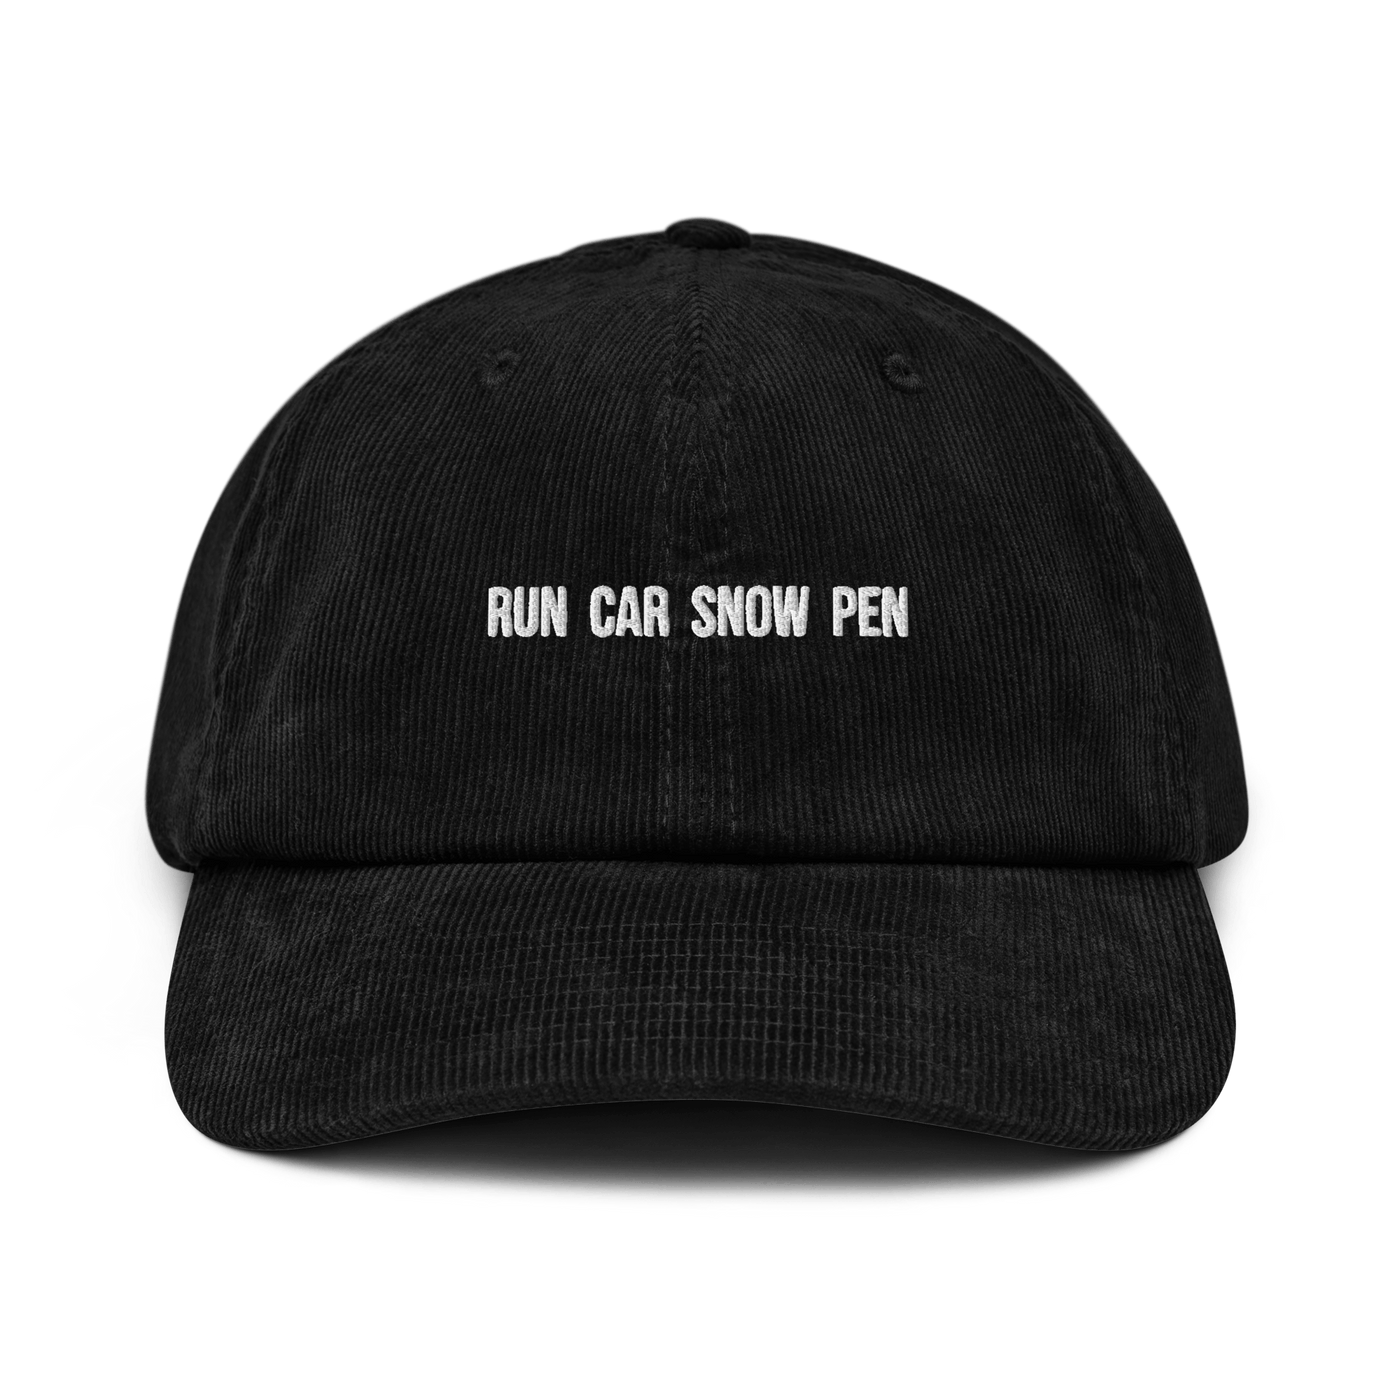 Run Car Snow Pen Corduroy hat - Black - - Just Another Cap Store